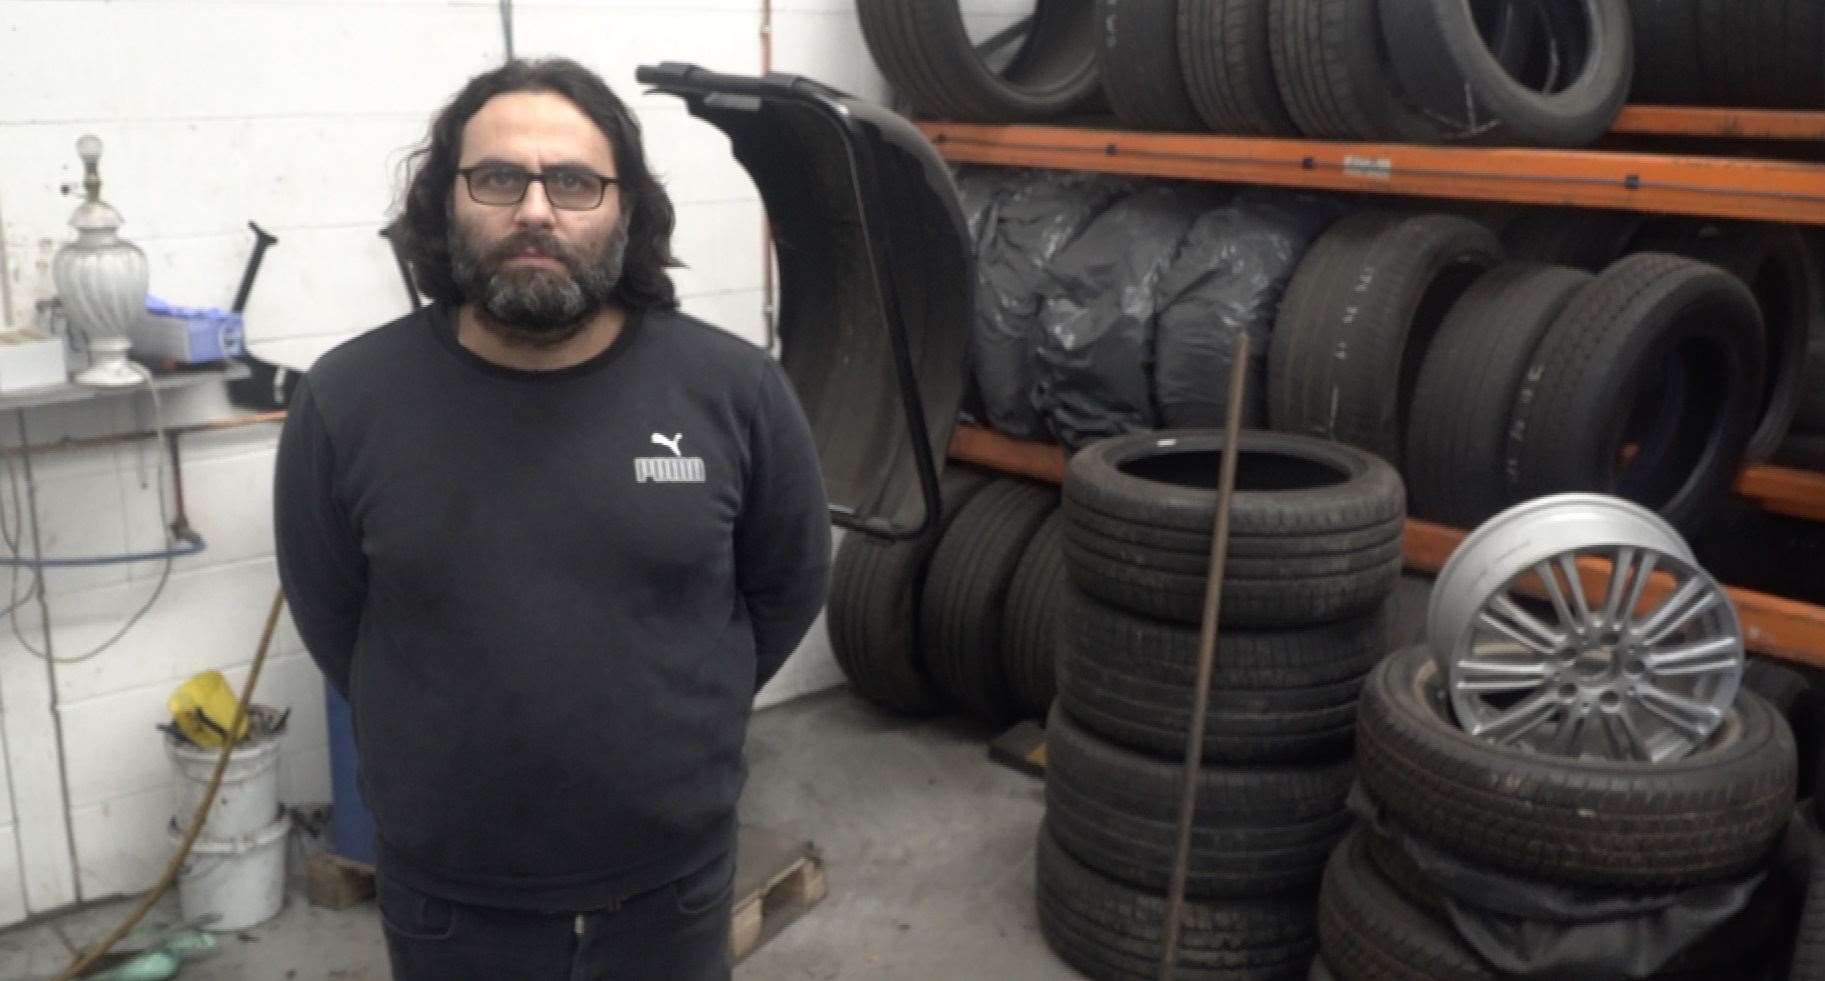 Hassan Refare has closed his Ashford Kent Tyres business